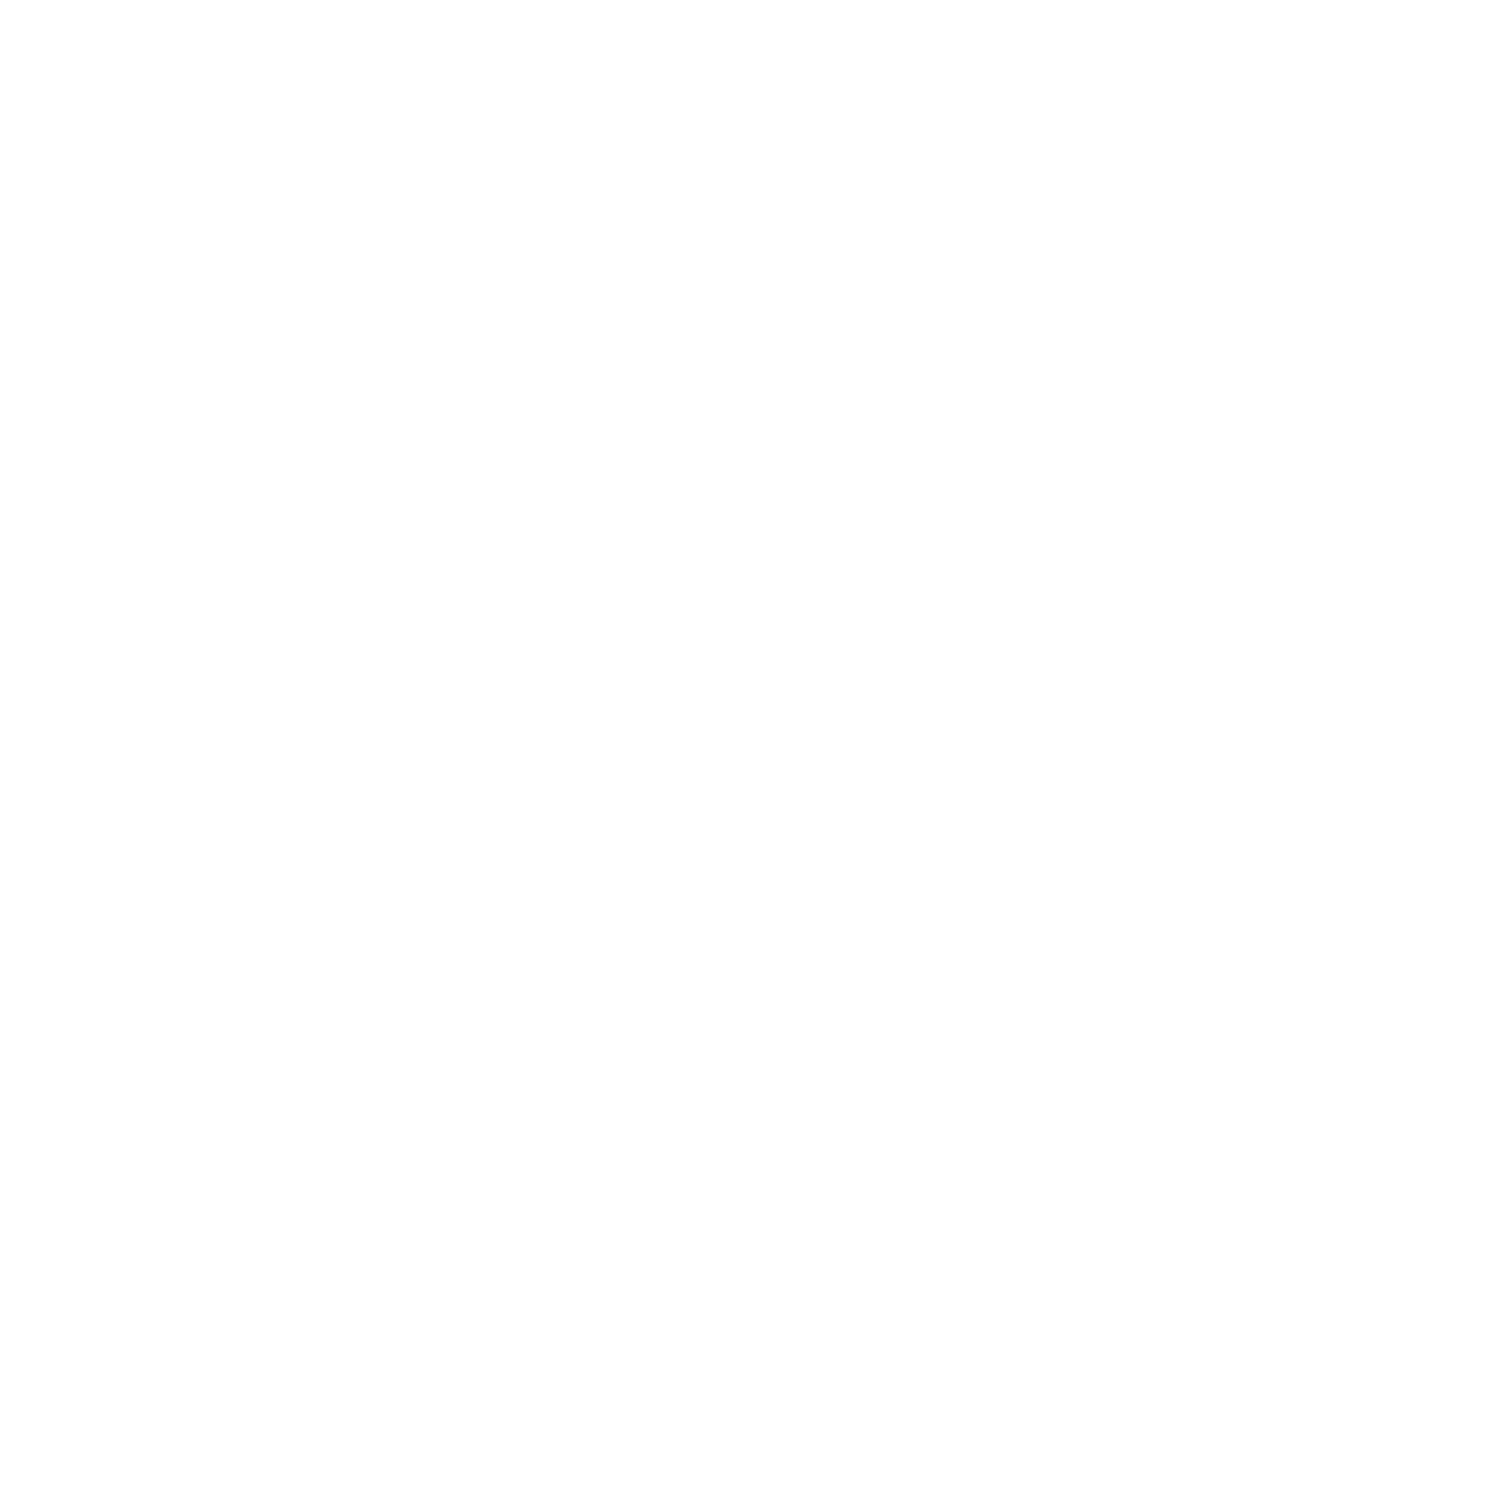 DJ Reese